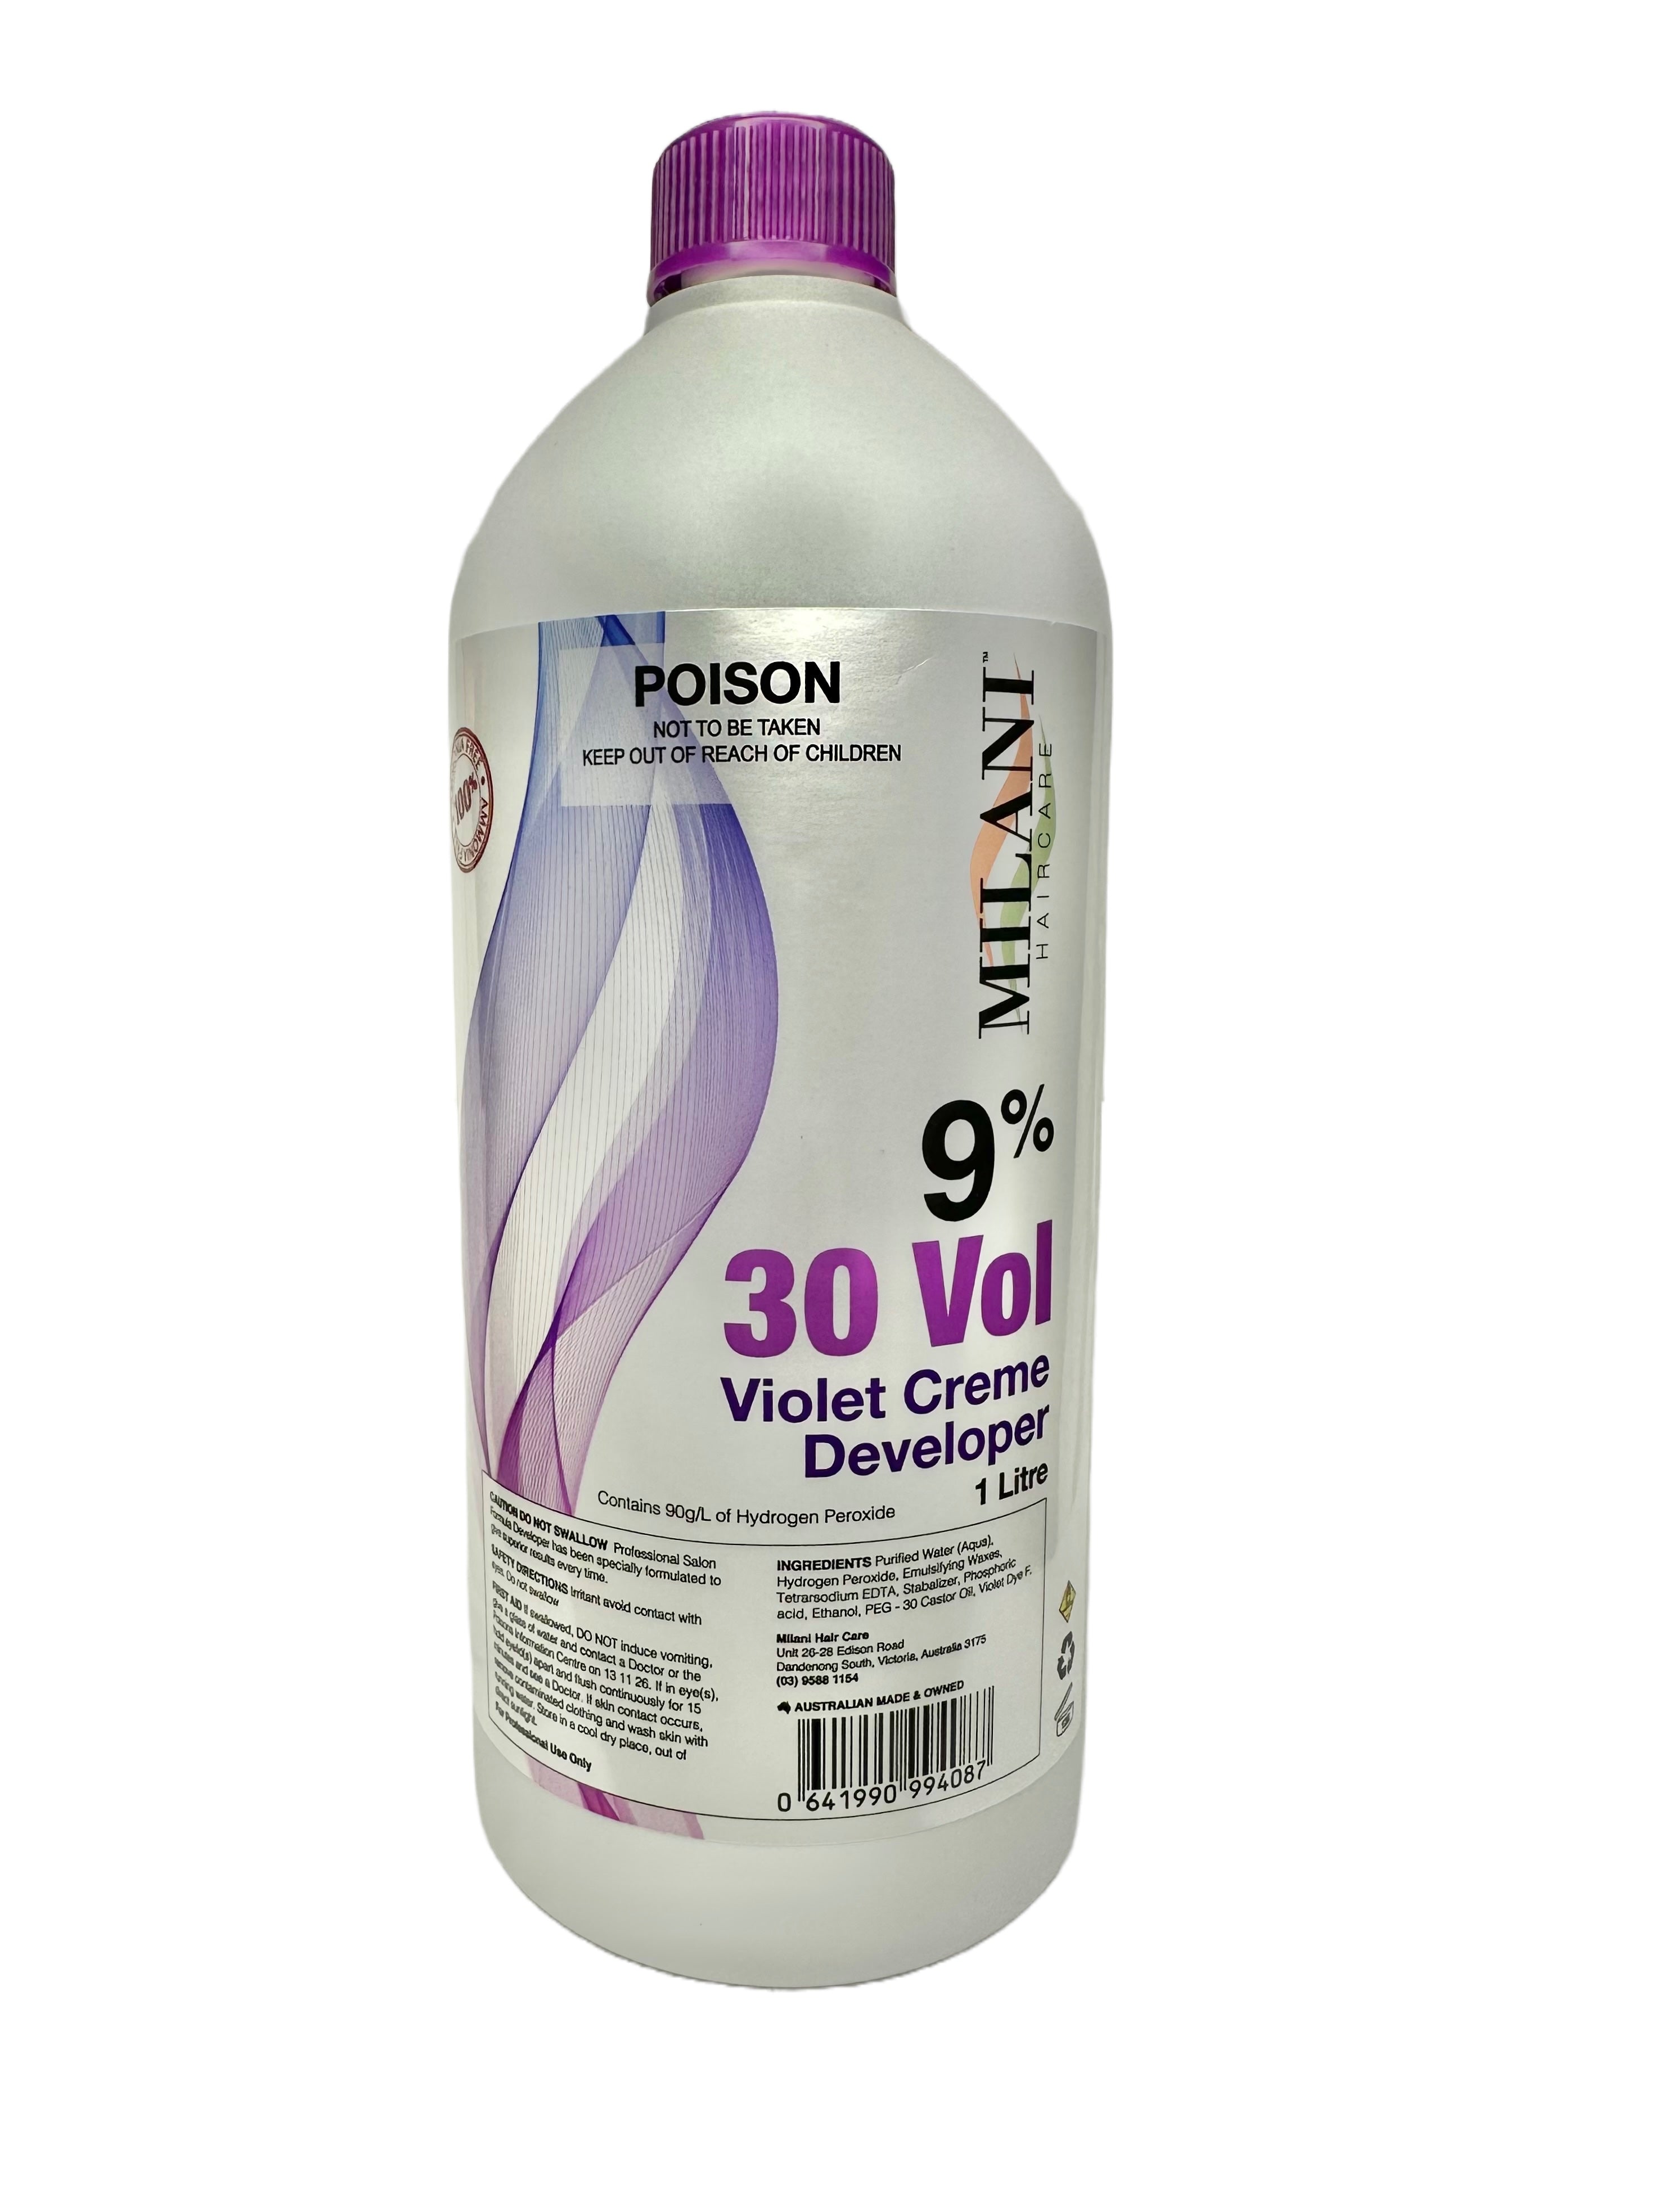 Milani Haircare Violet Creme Developer 30 Vol 9% 1 Litre